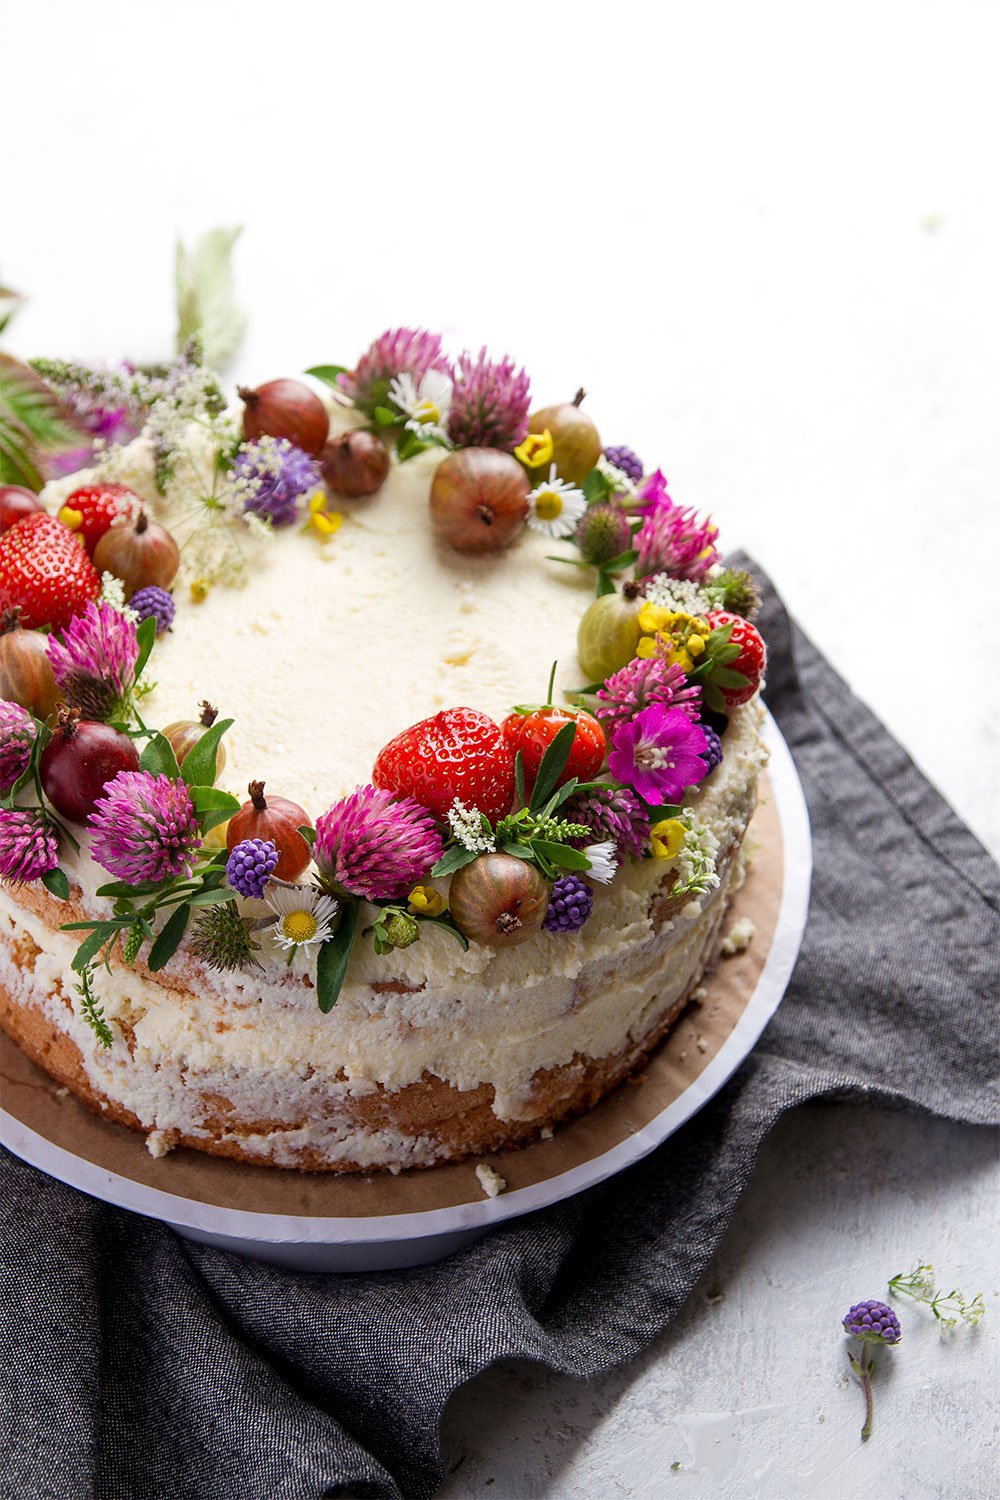 Edible flower wedding cake | A petite wedding cake with edib… | Flickr